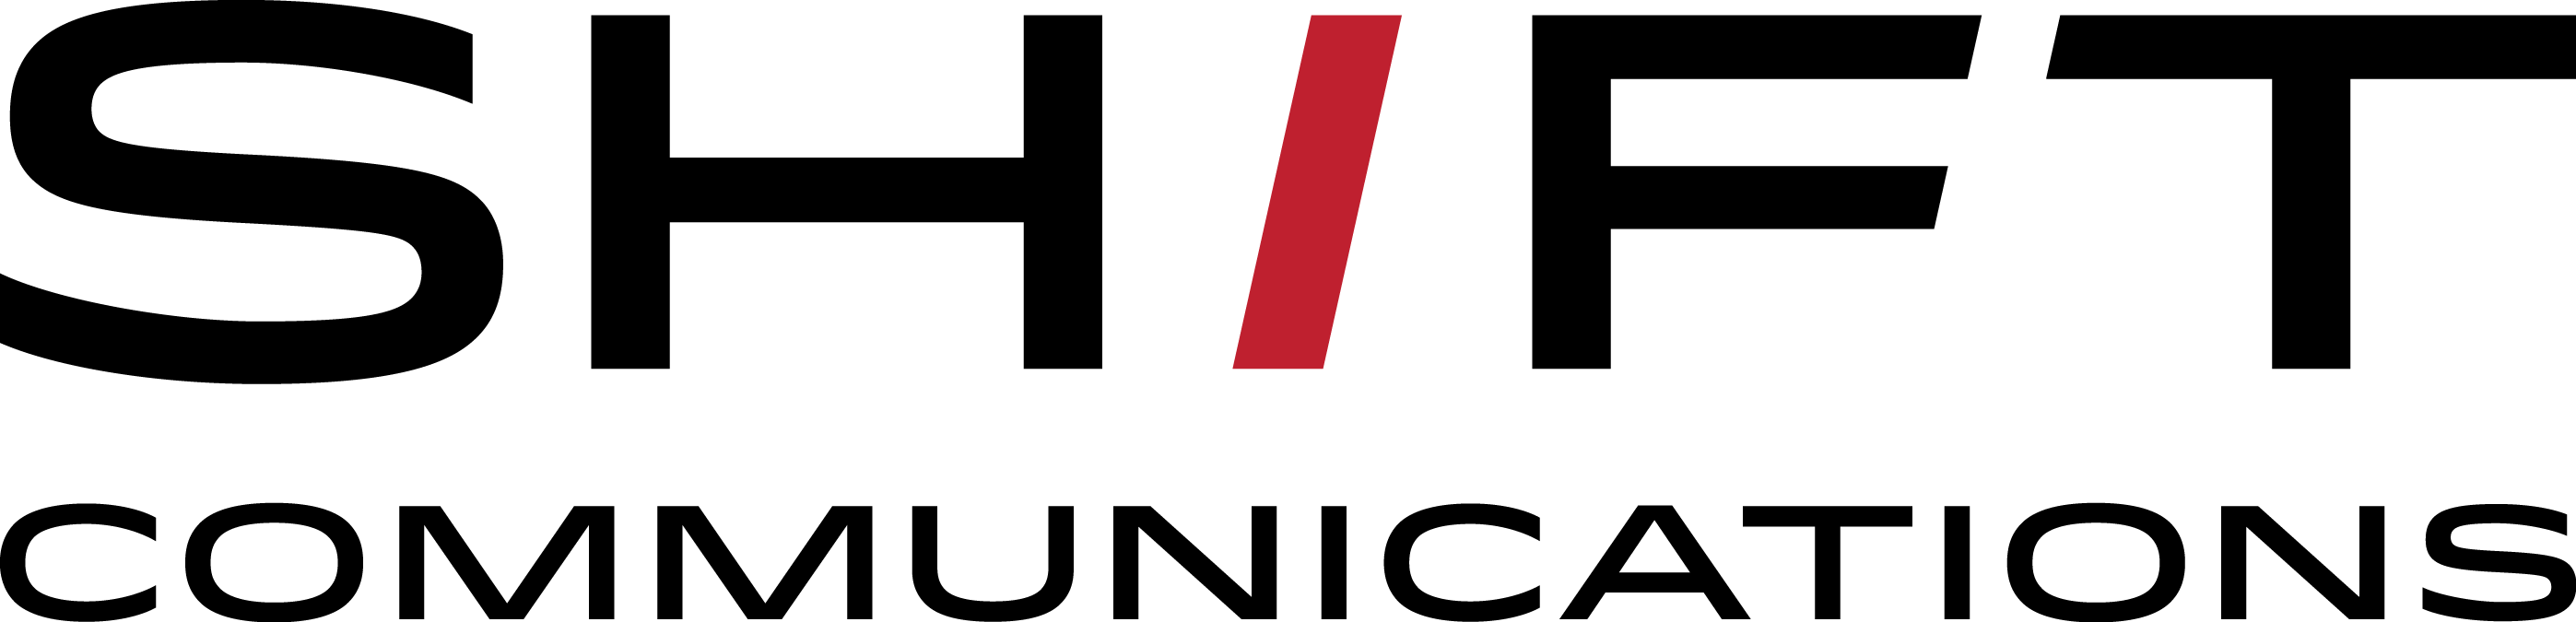 The HIMSS Social Media Ambassador Program - Logo - https://s39939.pcdn.co/wp-content/uploads/2018/11/Community-Engagement-2.0.png